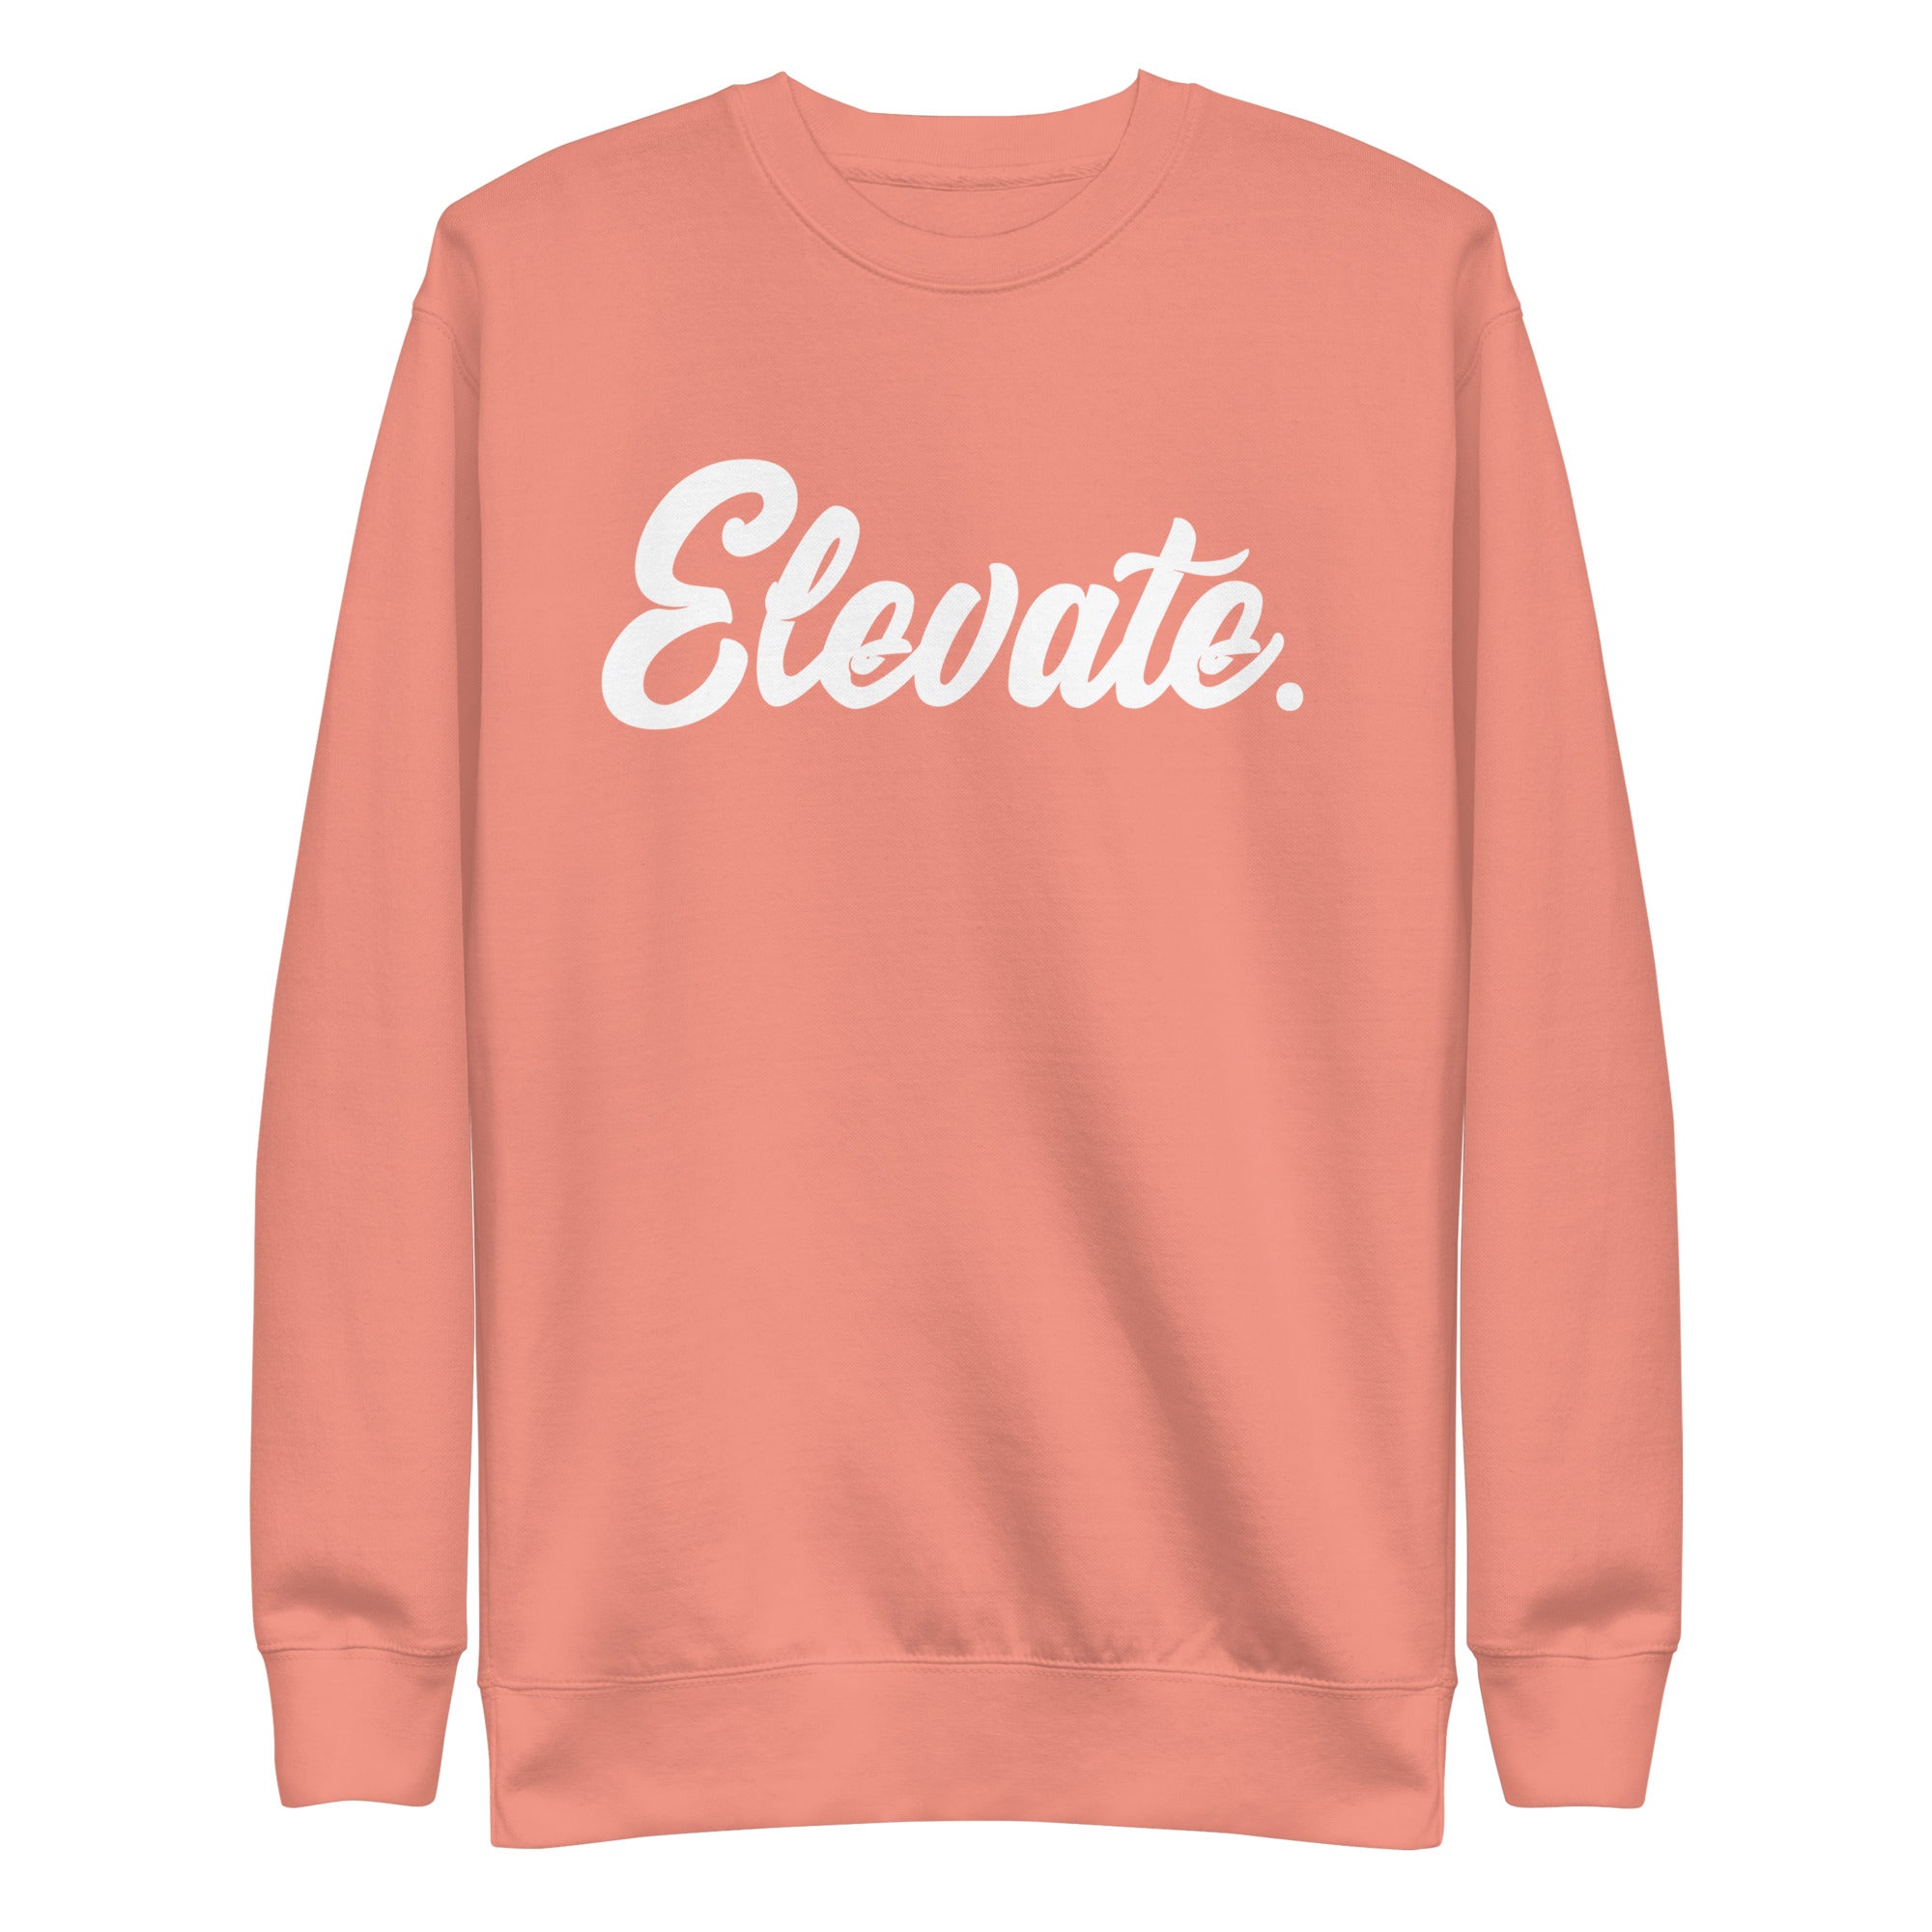 Elevate. Premium Sweatshirt